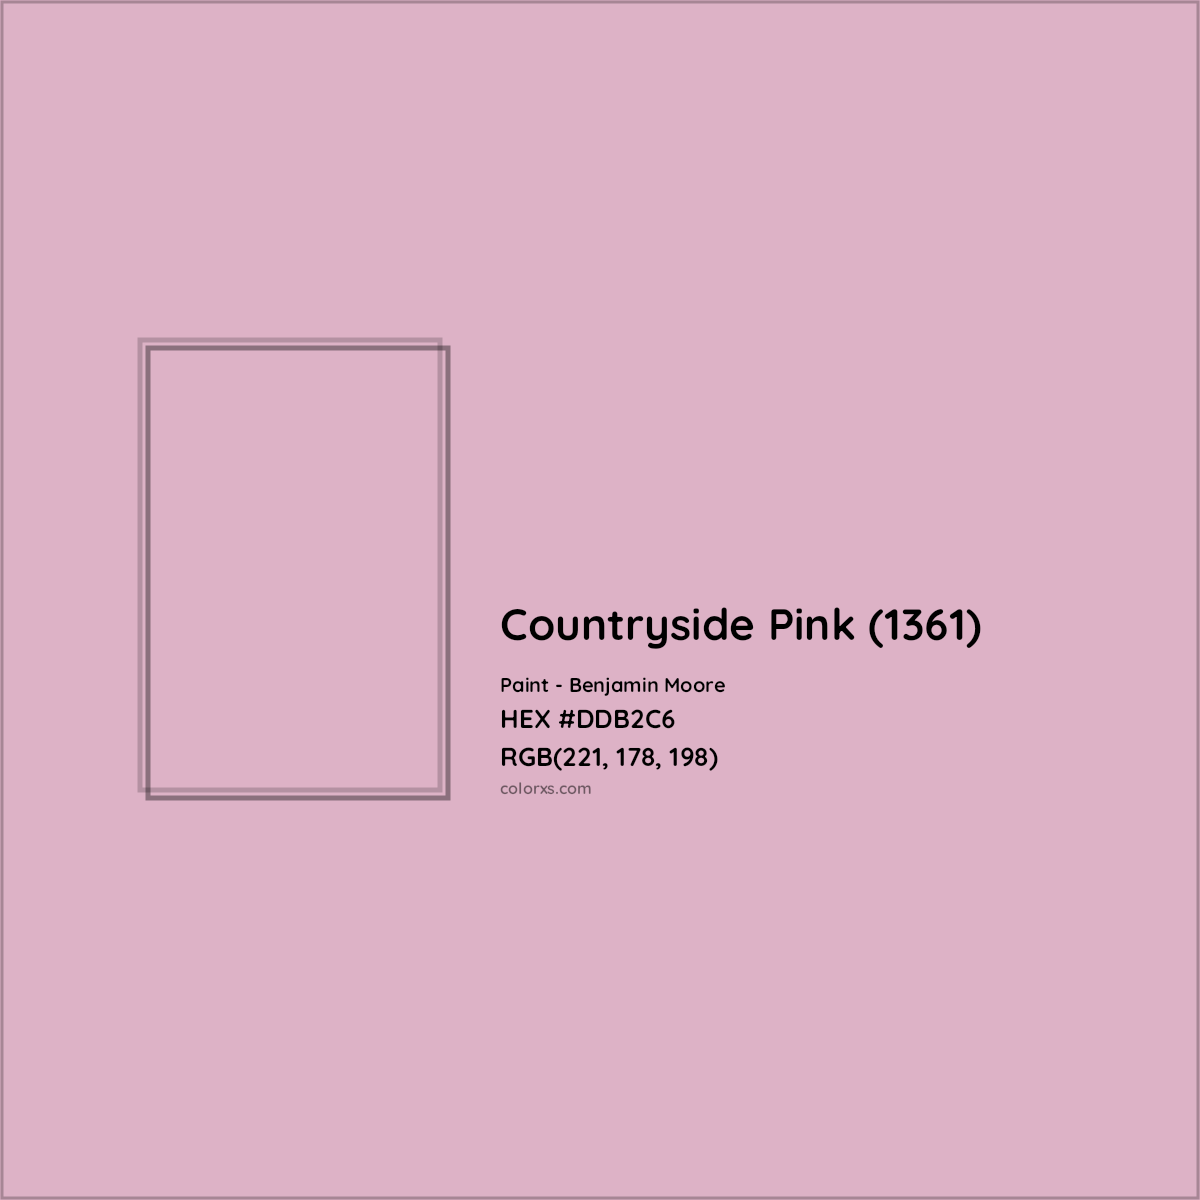 HEX #DDB2C6 Countryside Pink (1361) Paint Benjamin Moore - Color Code